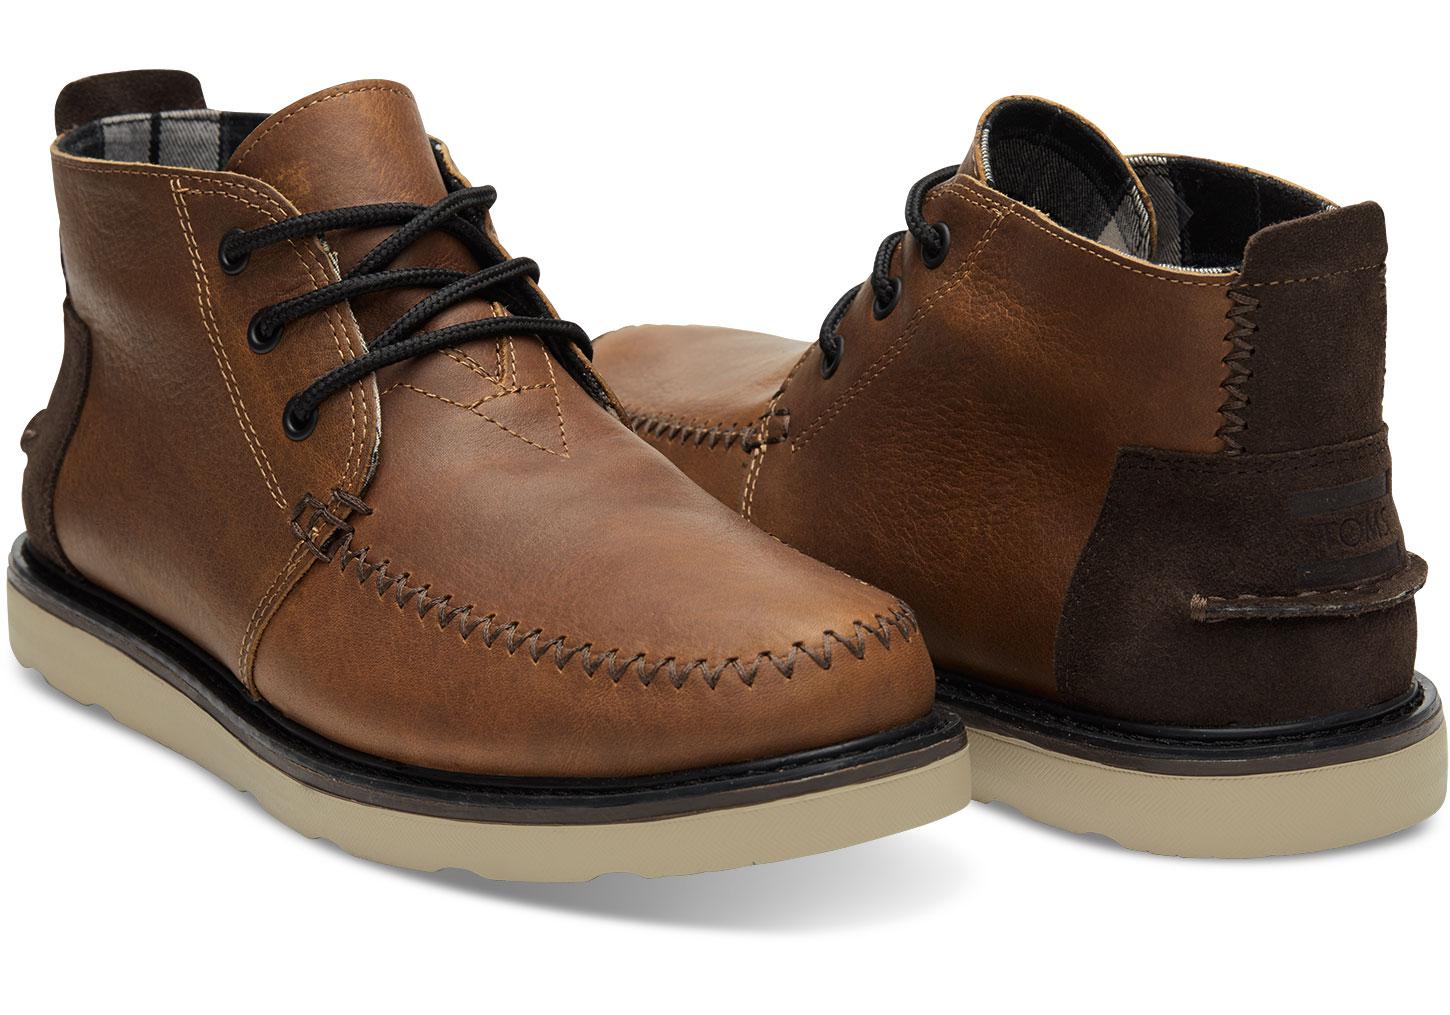 TOMS Waterproof Brown Leather Men's Chukka Boots for Men - Lyst